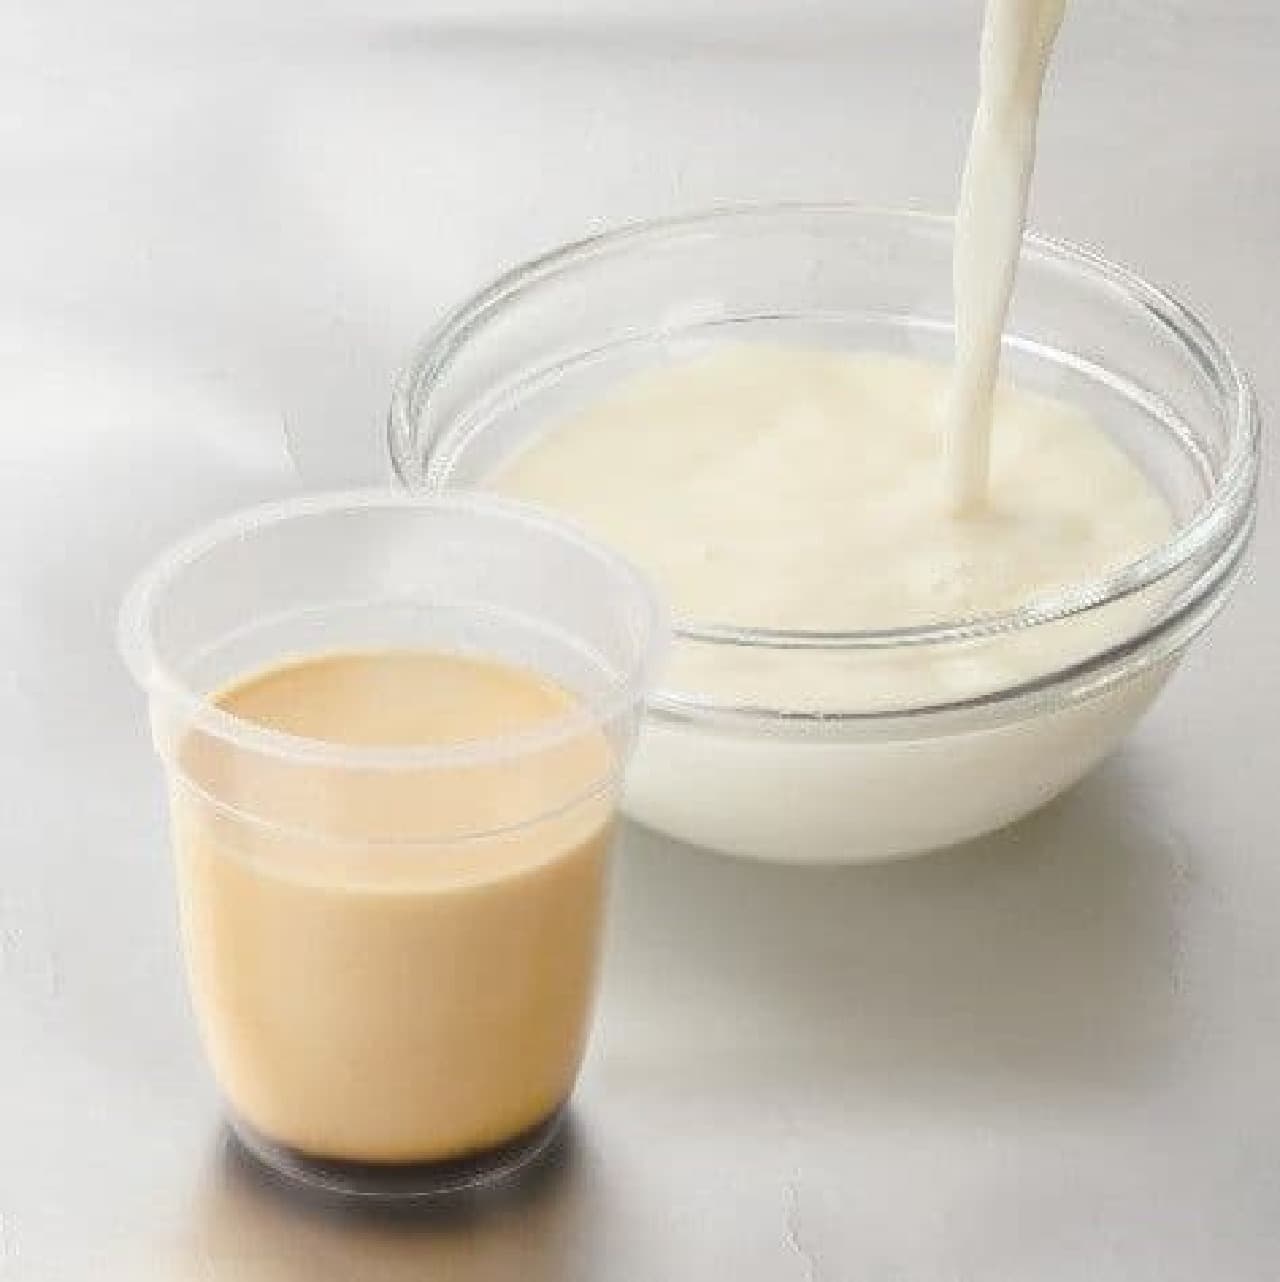 Chateraise "Additive-free Tokuno pudding fresh cream preparation"